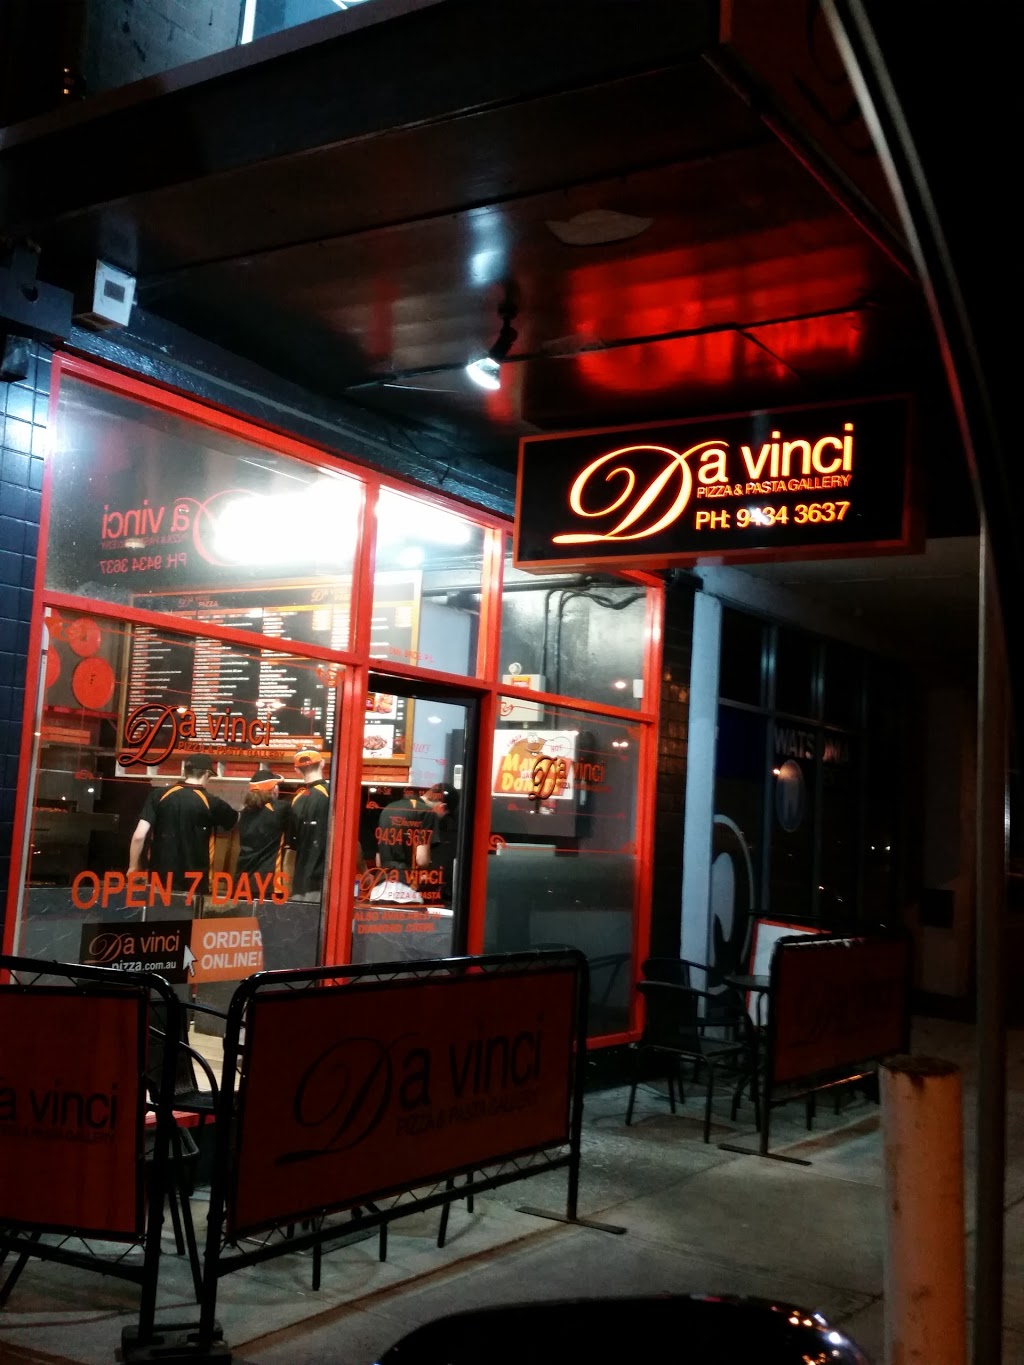 Da Vinci Pizza & Pasta Gallery | restaurant | 361 Greensborough Rd, Watsonia VIC 3087, Australia | 0394343637 OR +61 3 9434 3637